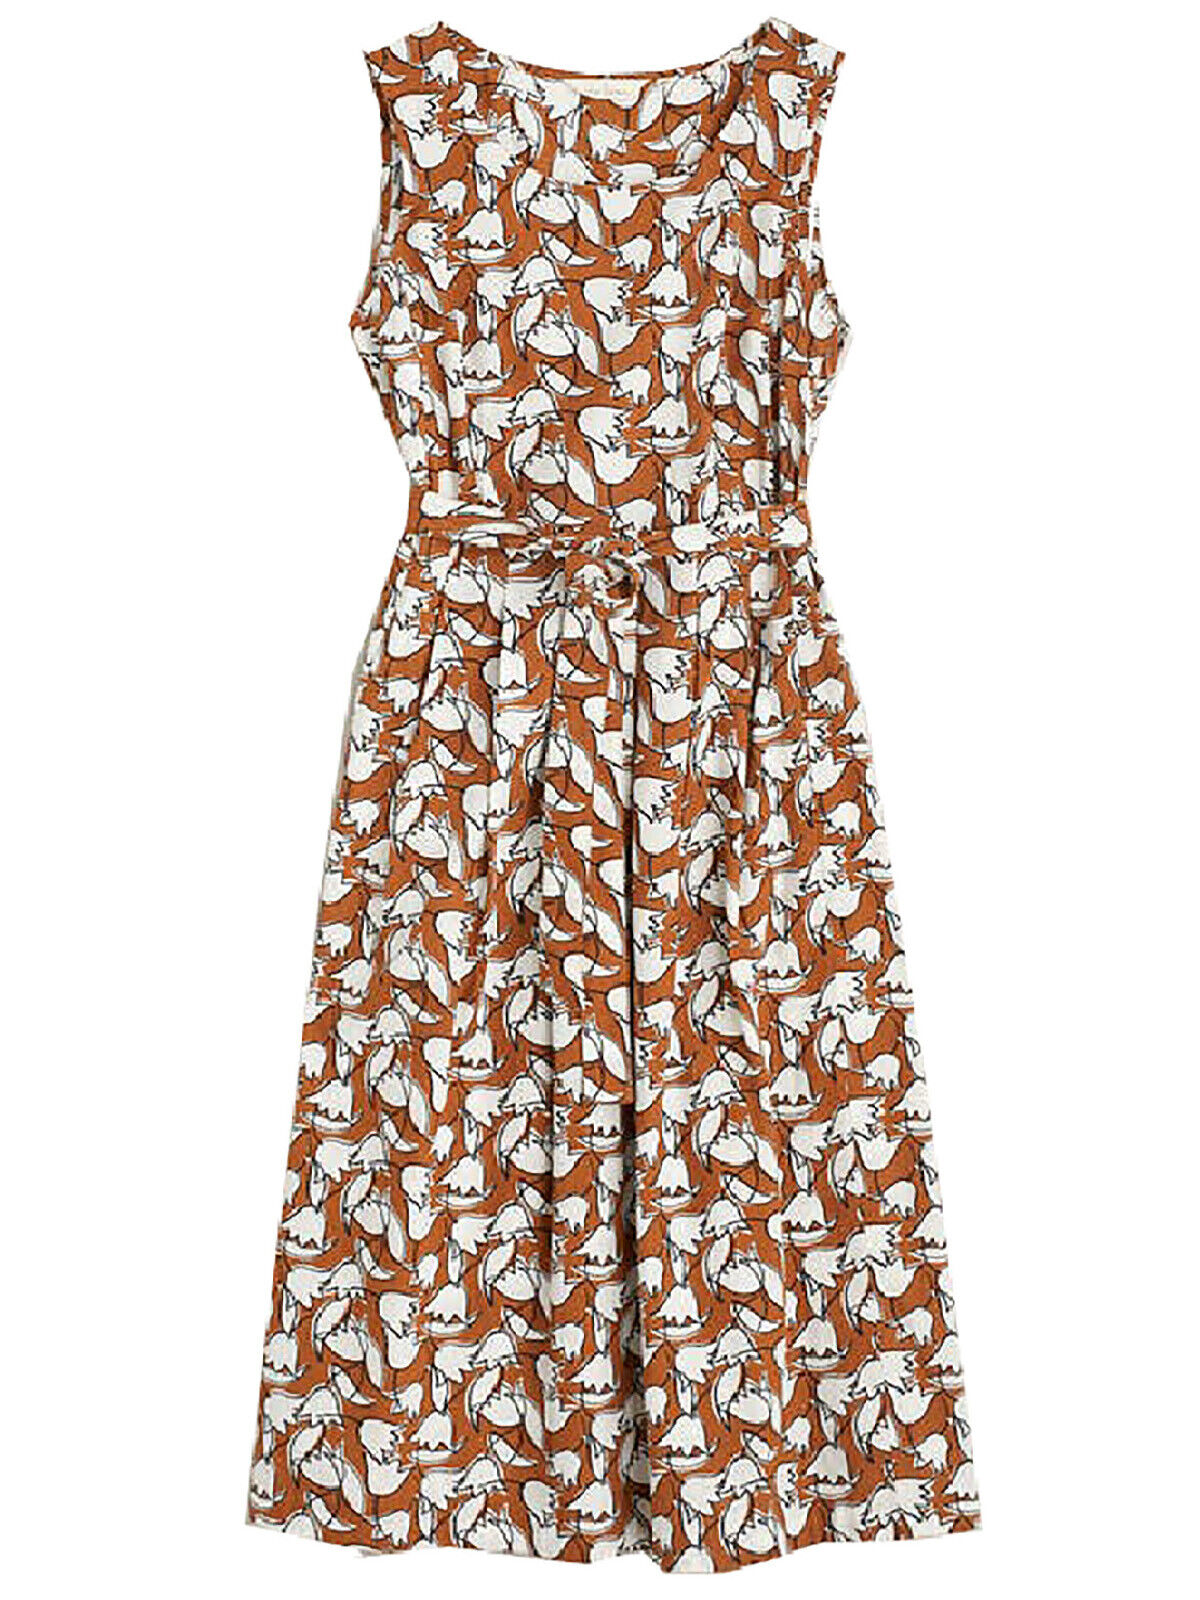 EX SEASALT Brown Tulip Print Belle Dress Sizes 8 10 12 14 16